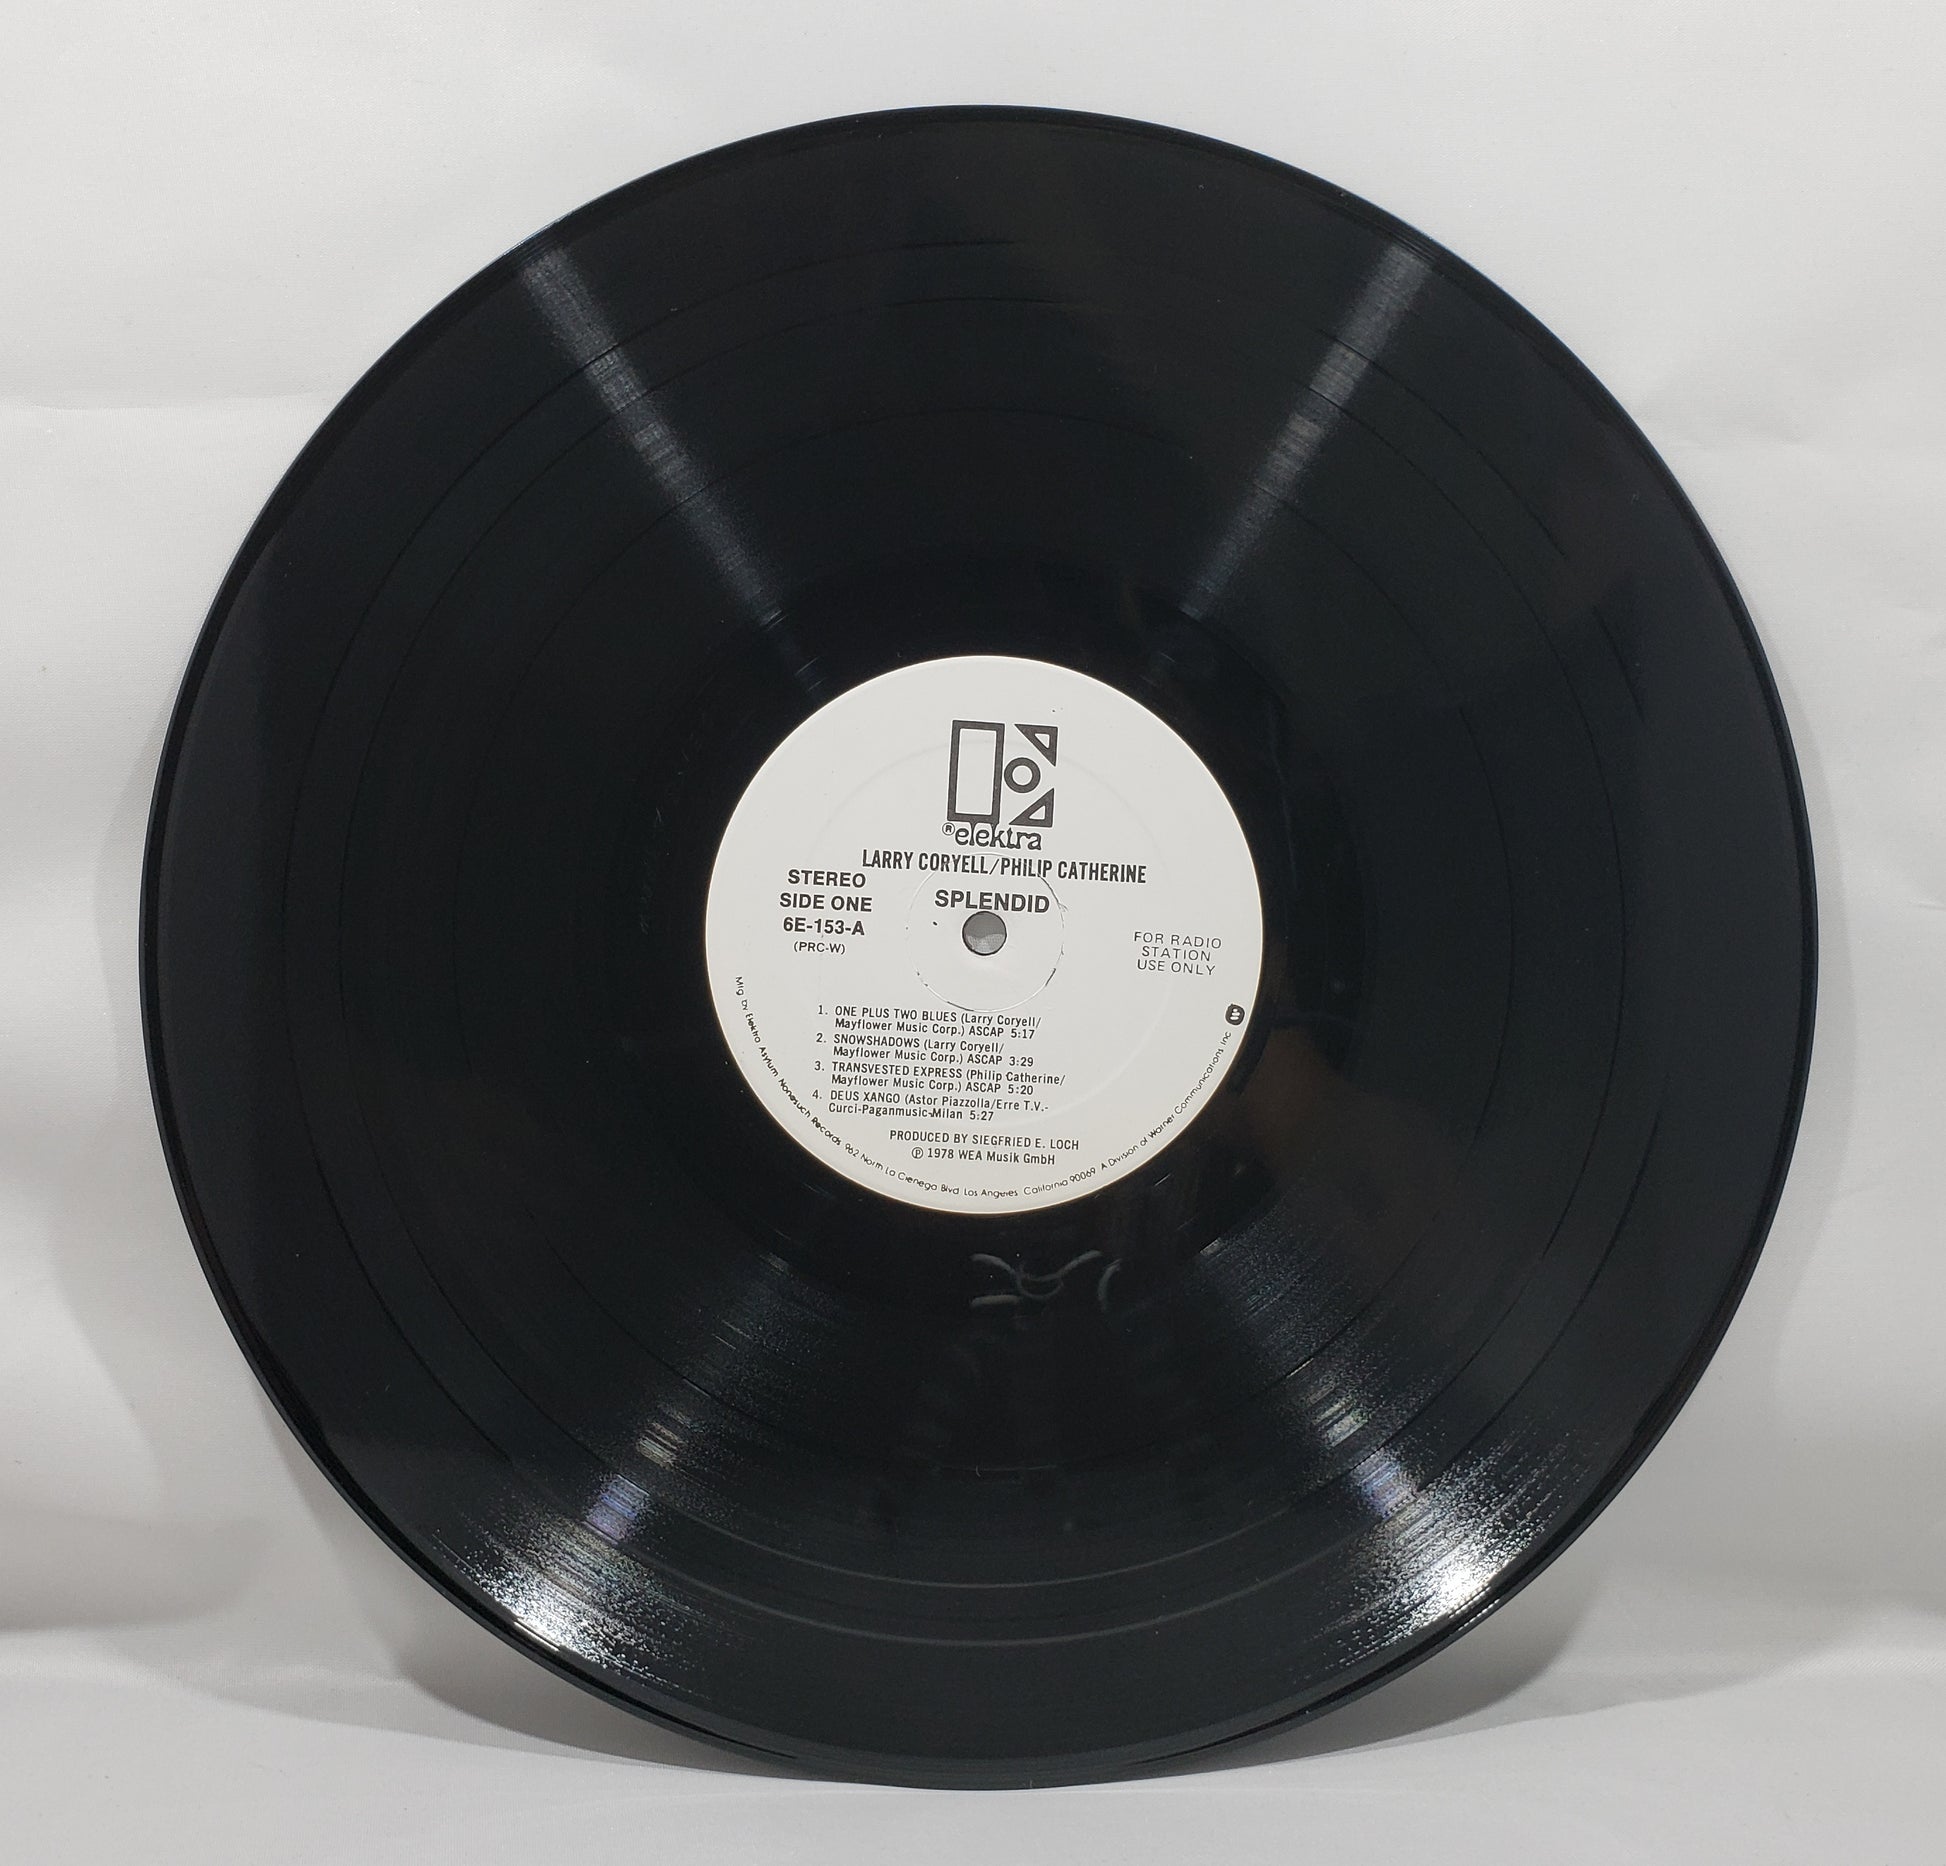 Coryell / Catherine - Splendid [1978 Promo] [Used Vinyl Record LP]